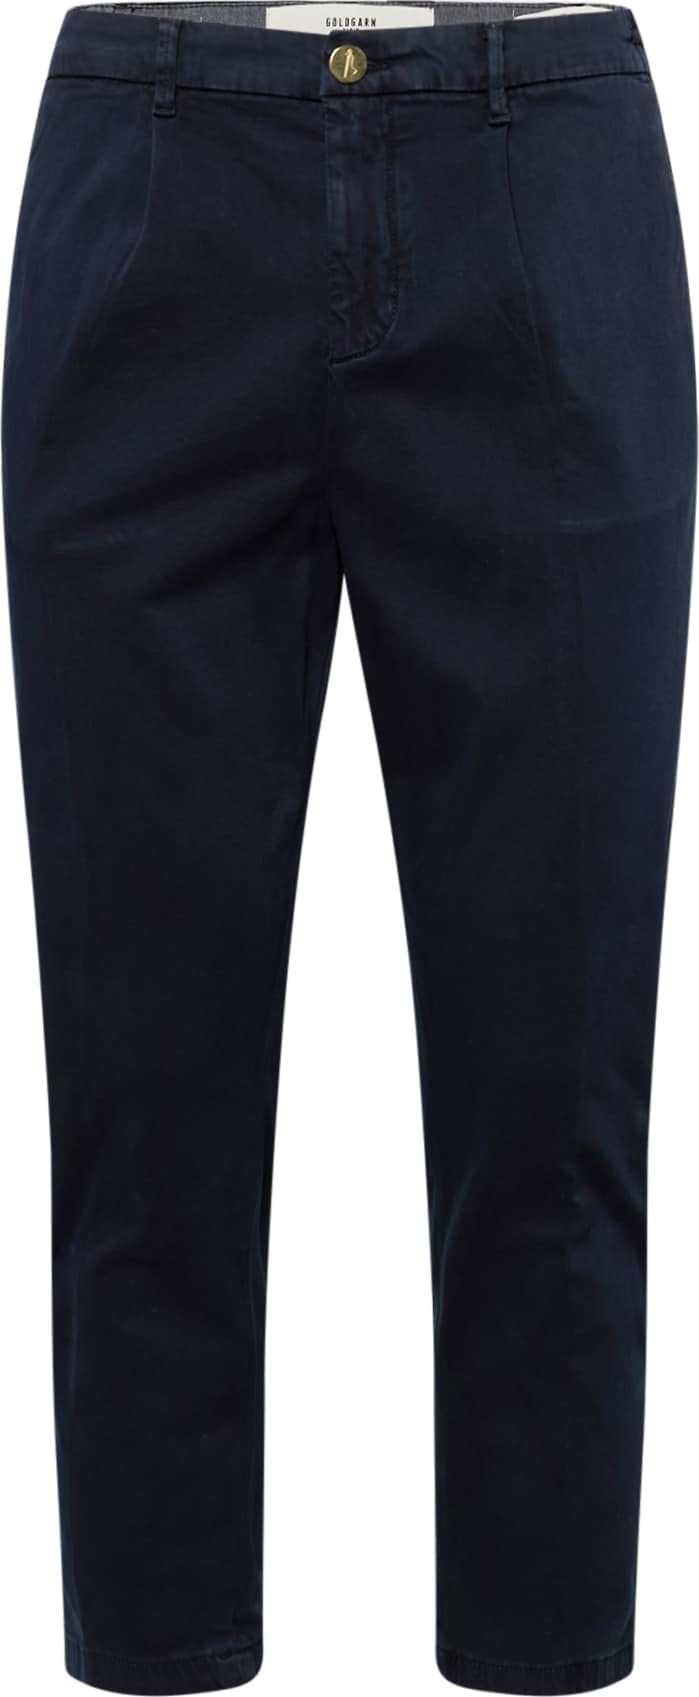 Kalhoty se sklady v pase Goldgarn tmavě modrá